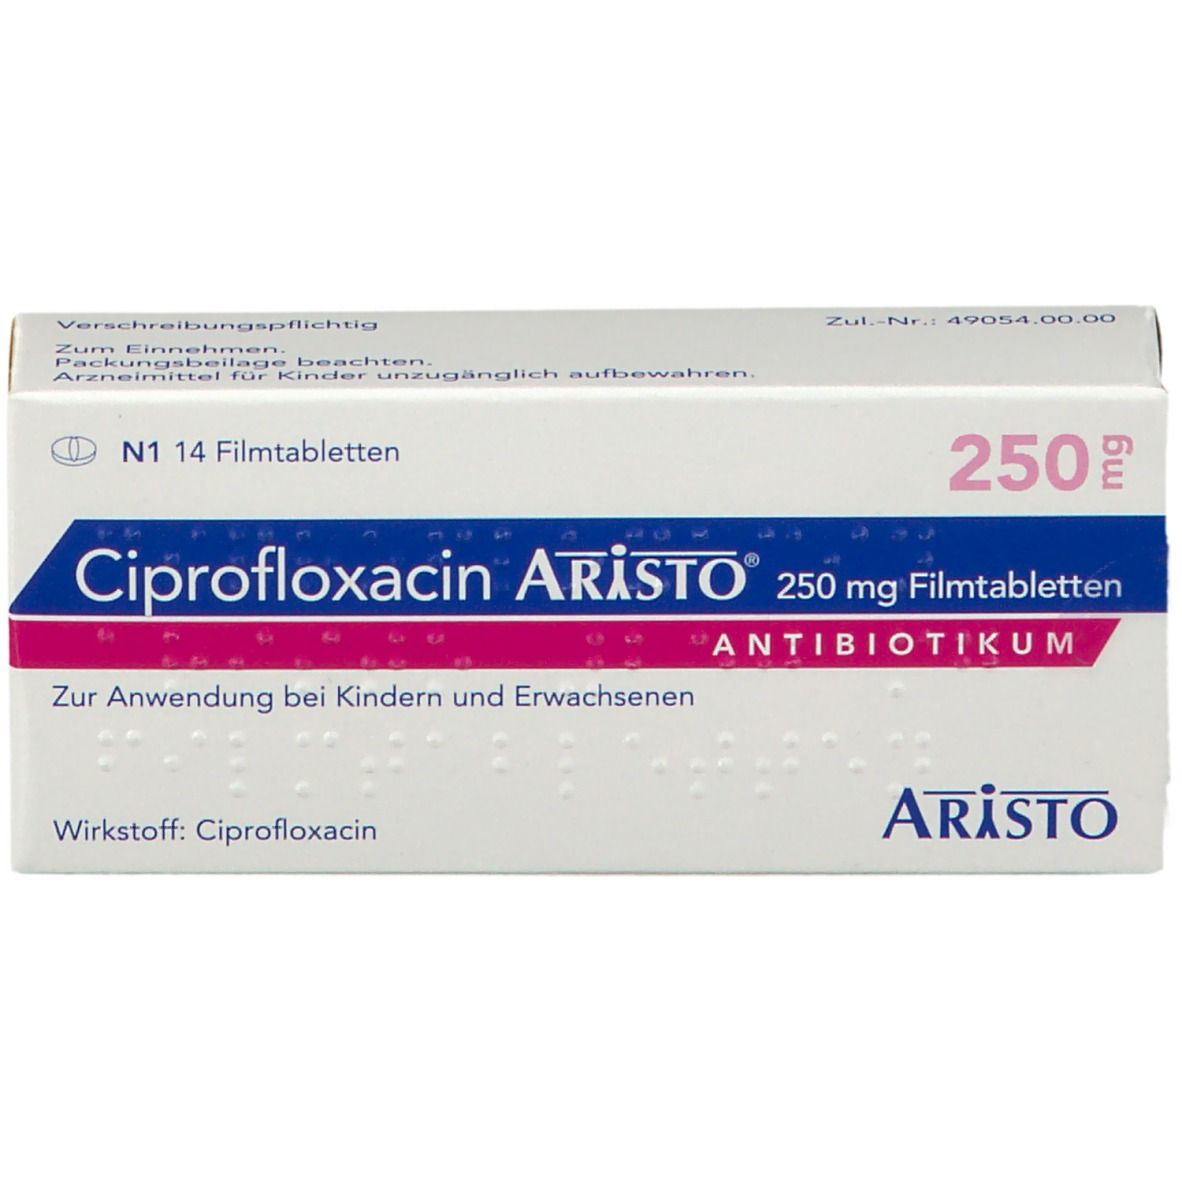 Ciprofloxacin Aristo® 250 mg